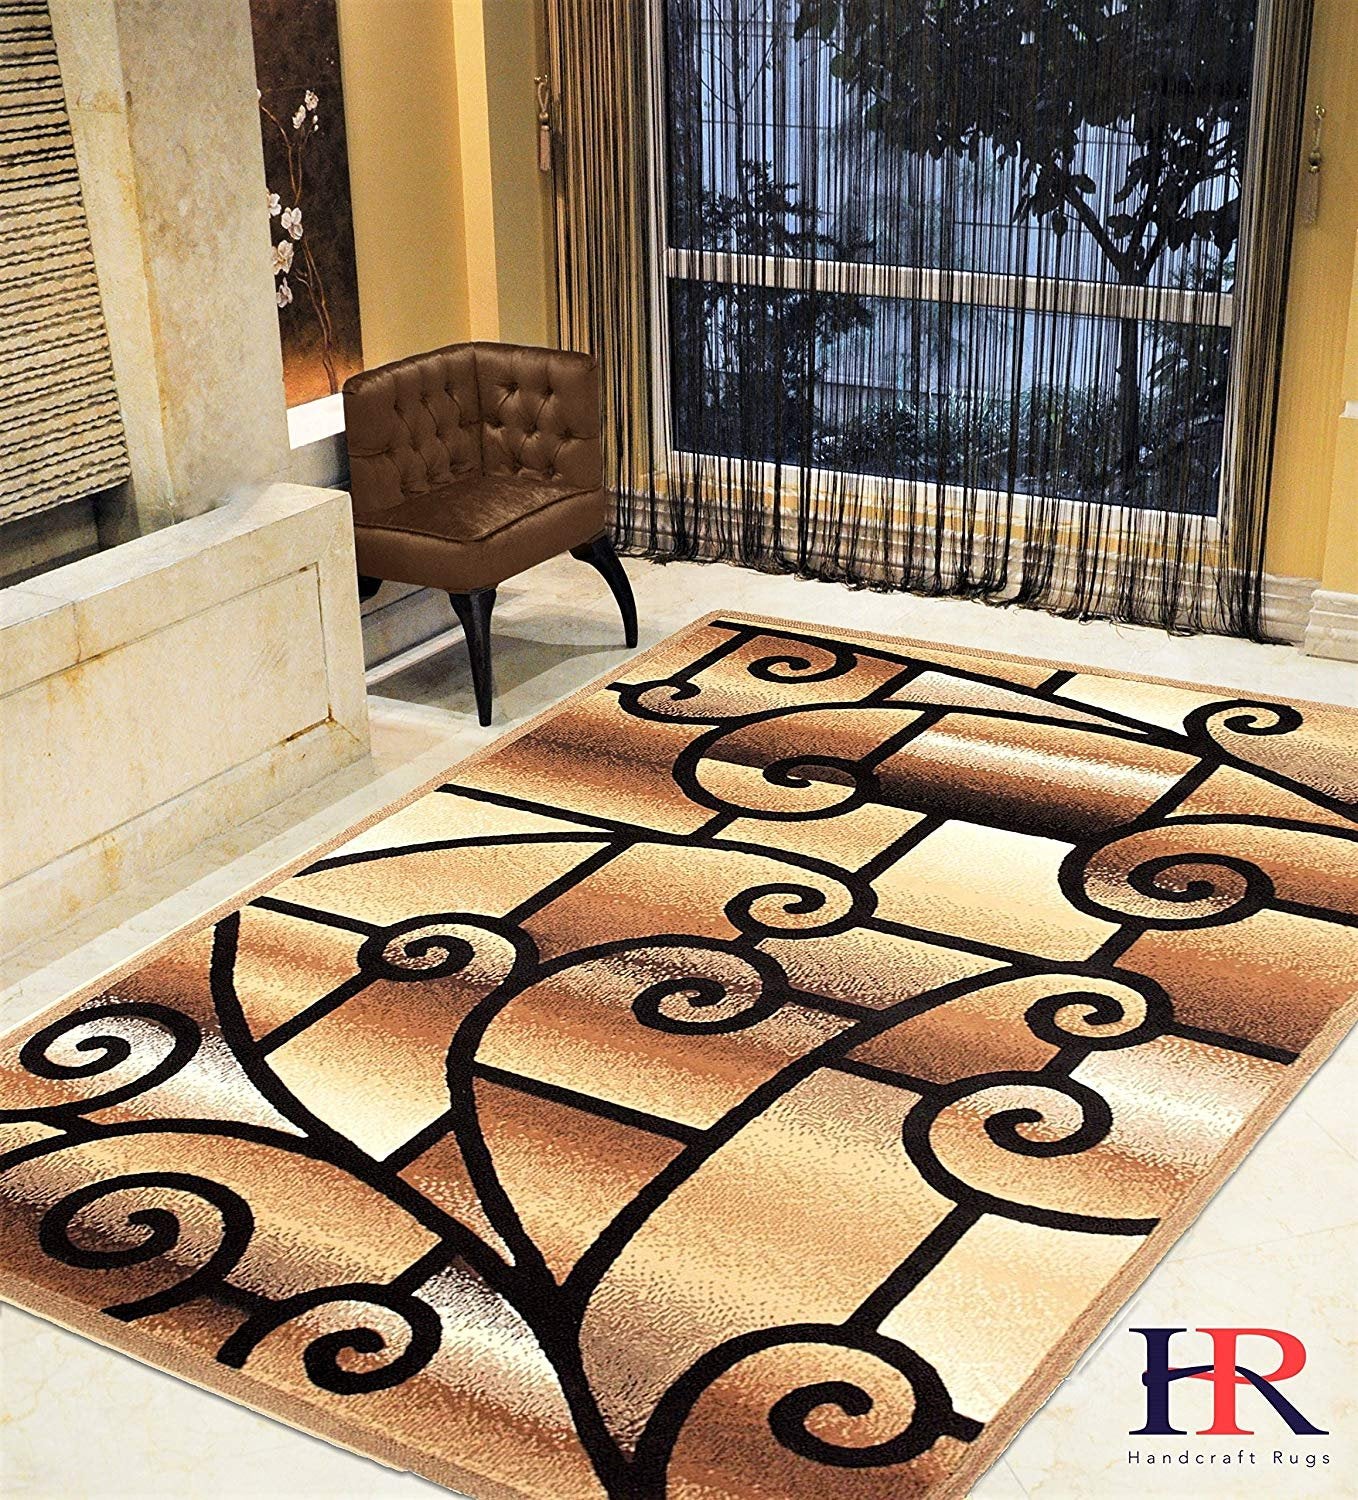 HR-Modern Contemporary Living Room Rug-Abstract,Geometric Swirls Pattern-Berber/Beige/Ivory/Chocolate (1'96"x 3'3")